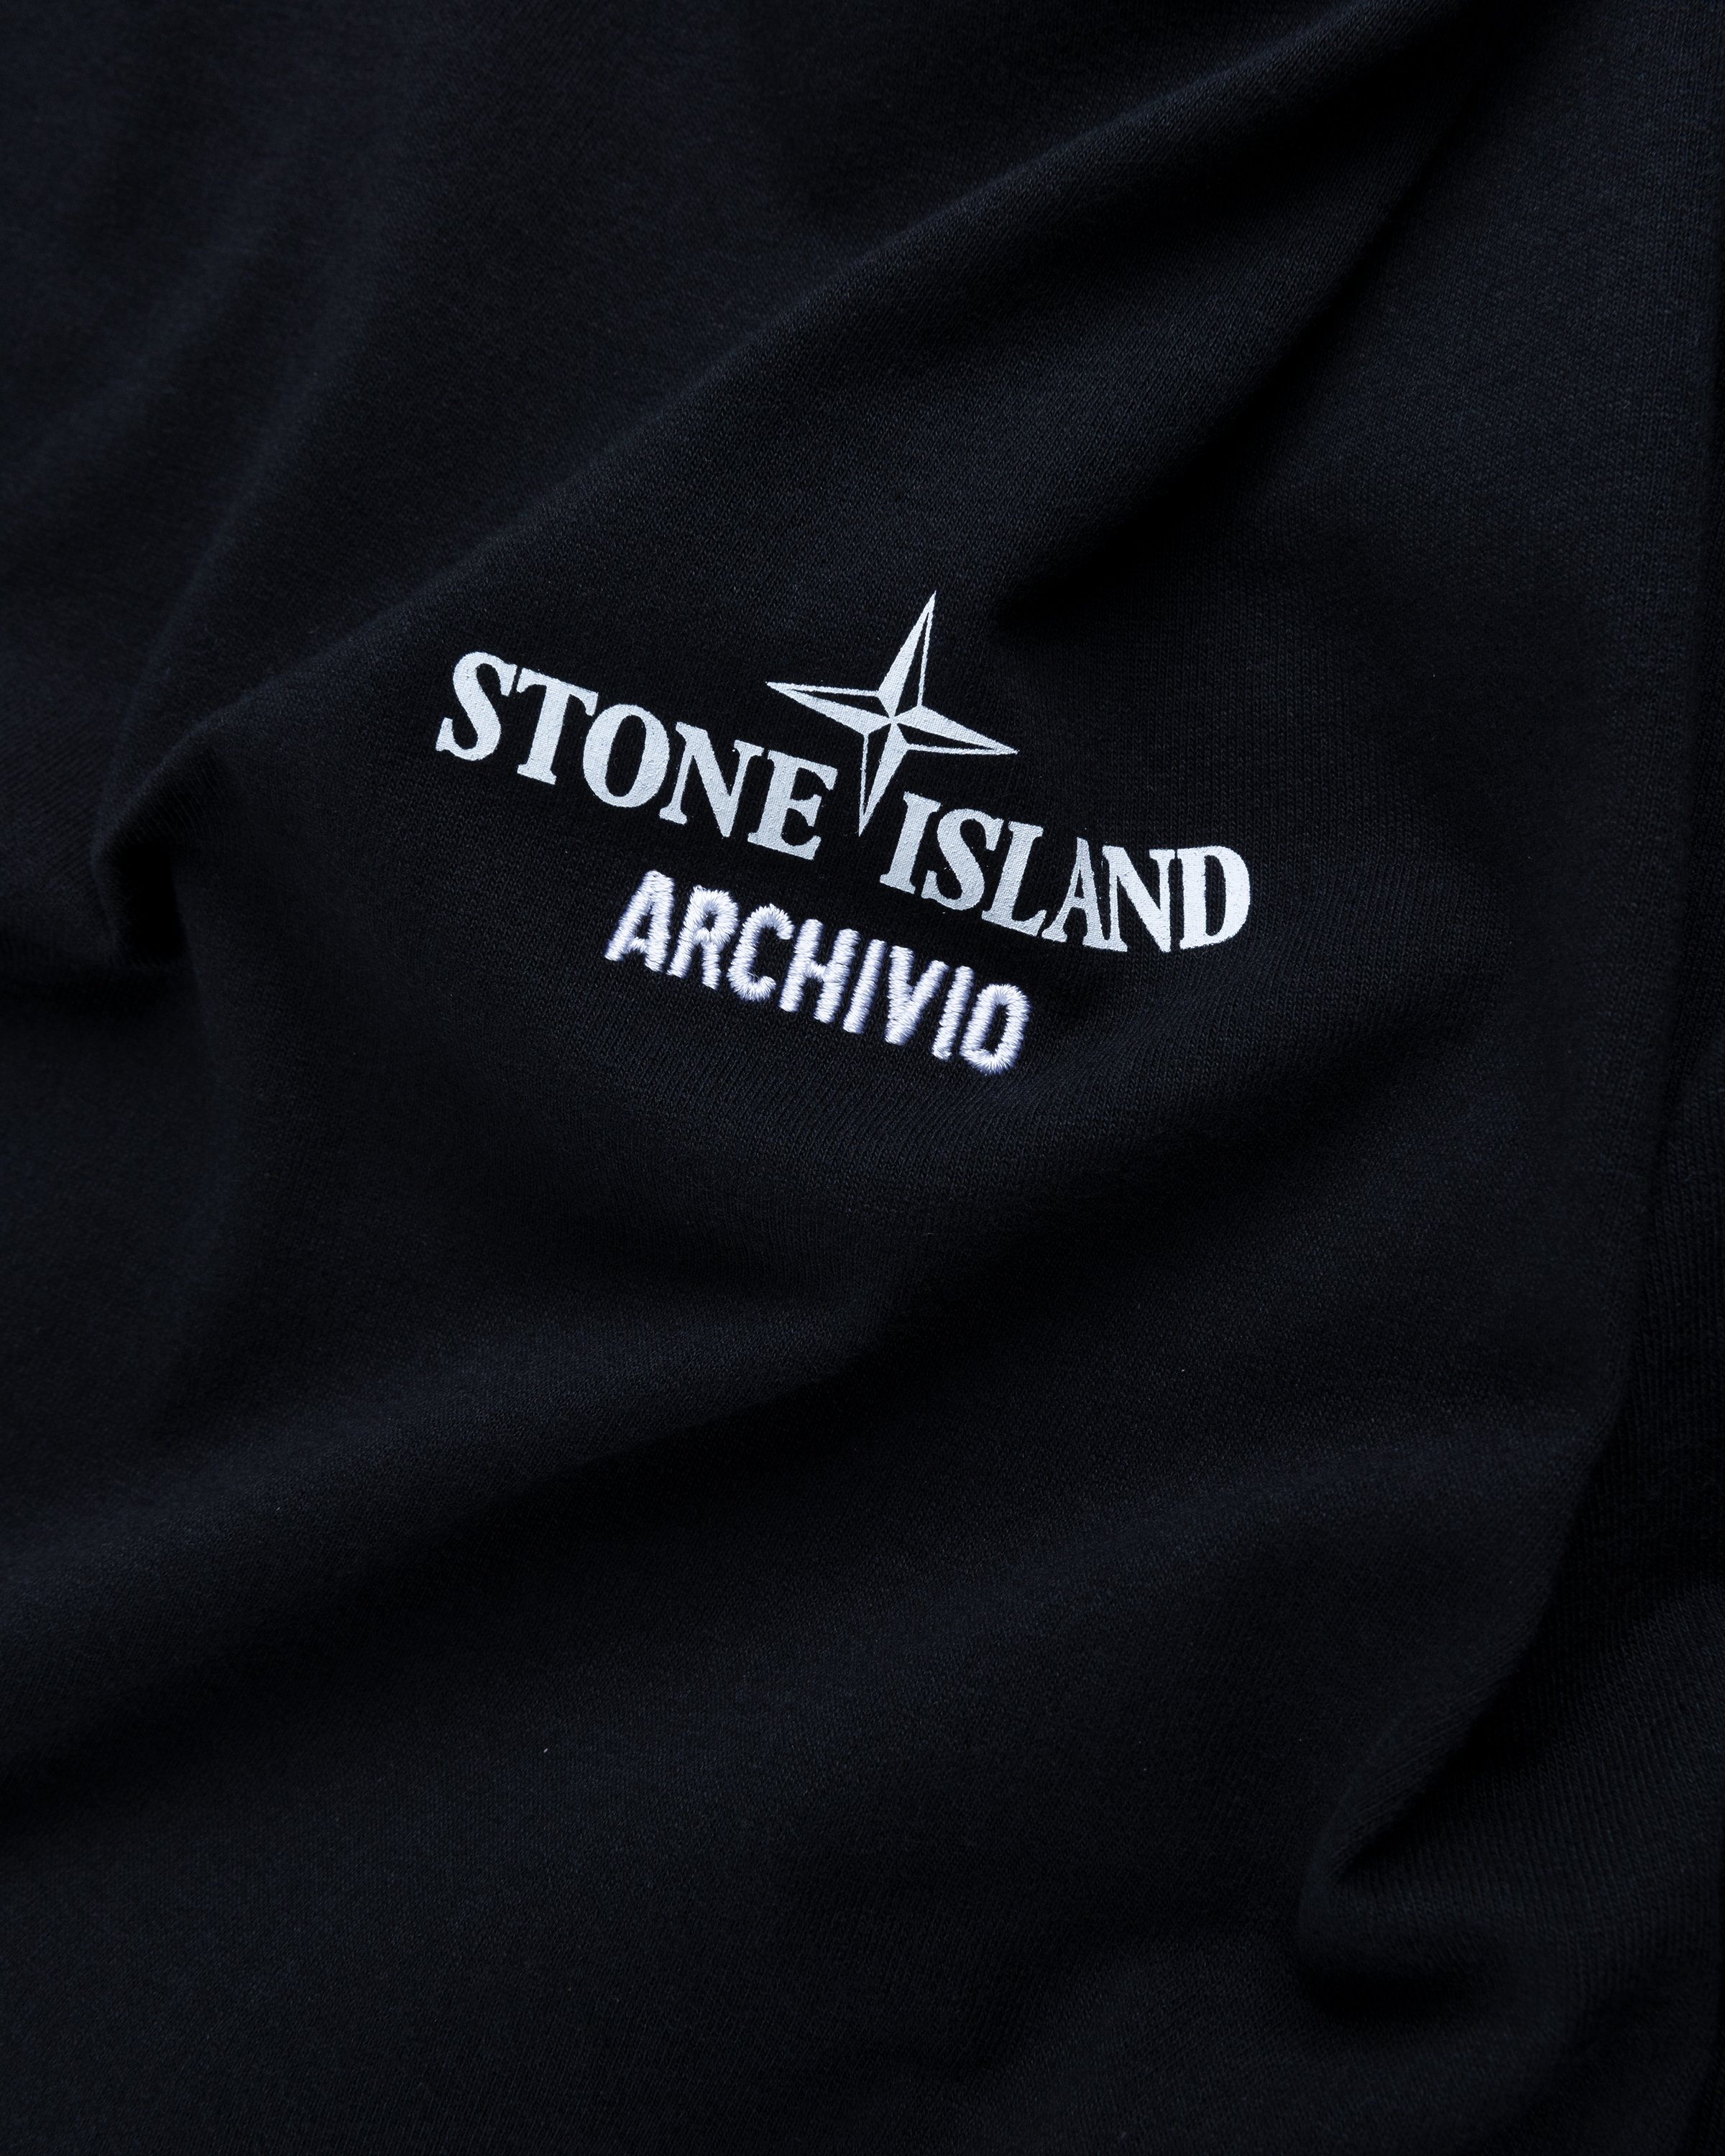 Stone Island - Archivio T-Shirt Black - Clothing - Black - Image 3